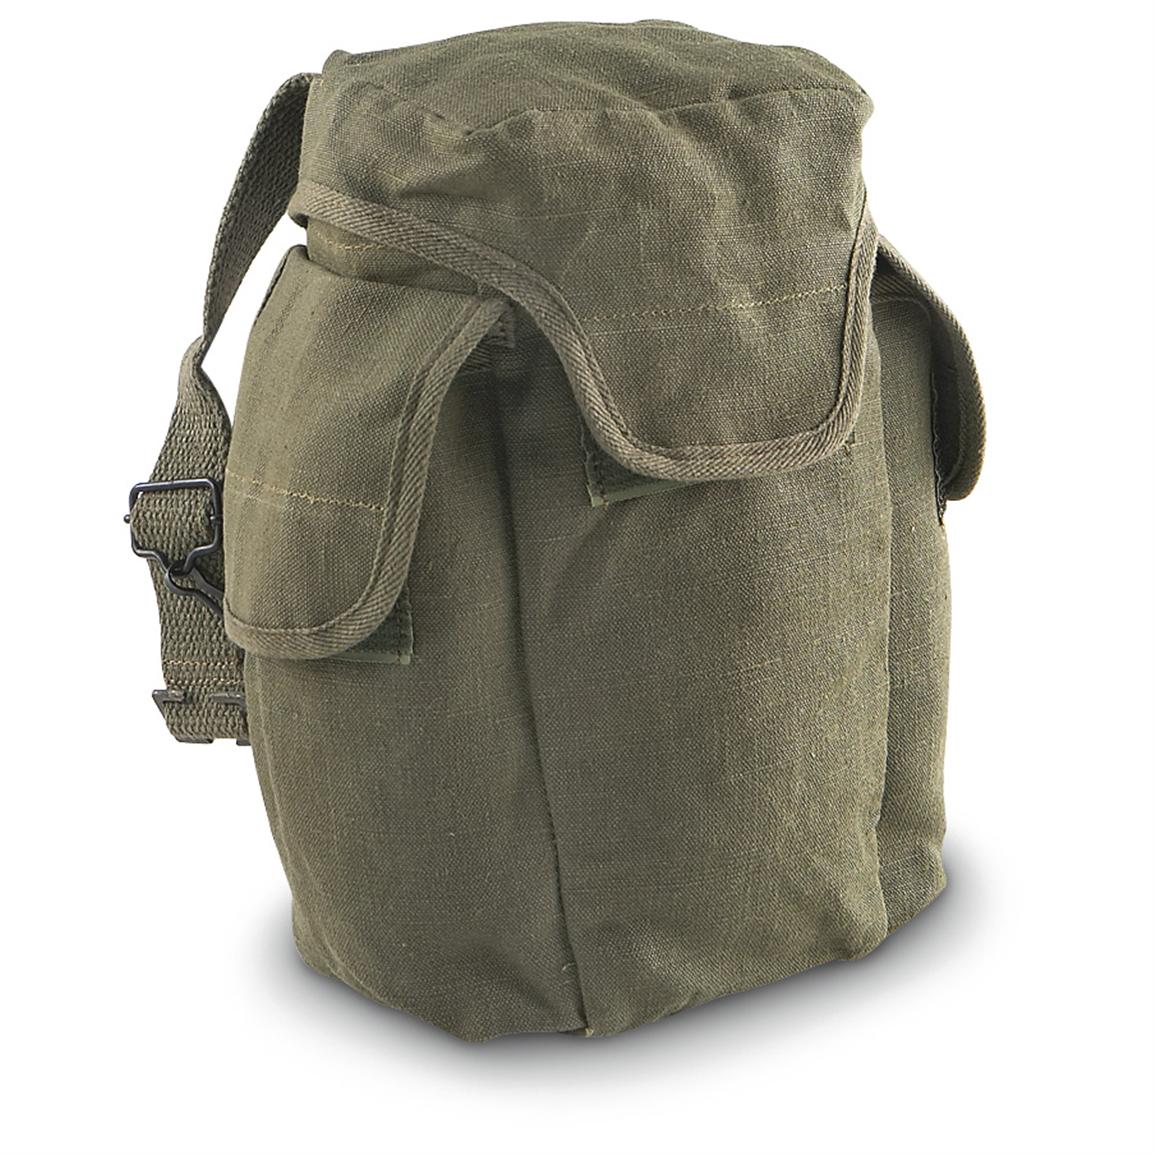 5 Used French Military Shoulder Bags, Olive Drab - 157748, Shoulder ...